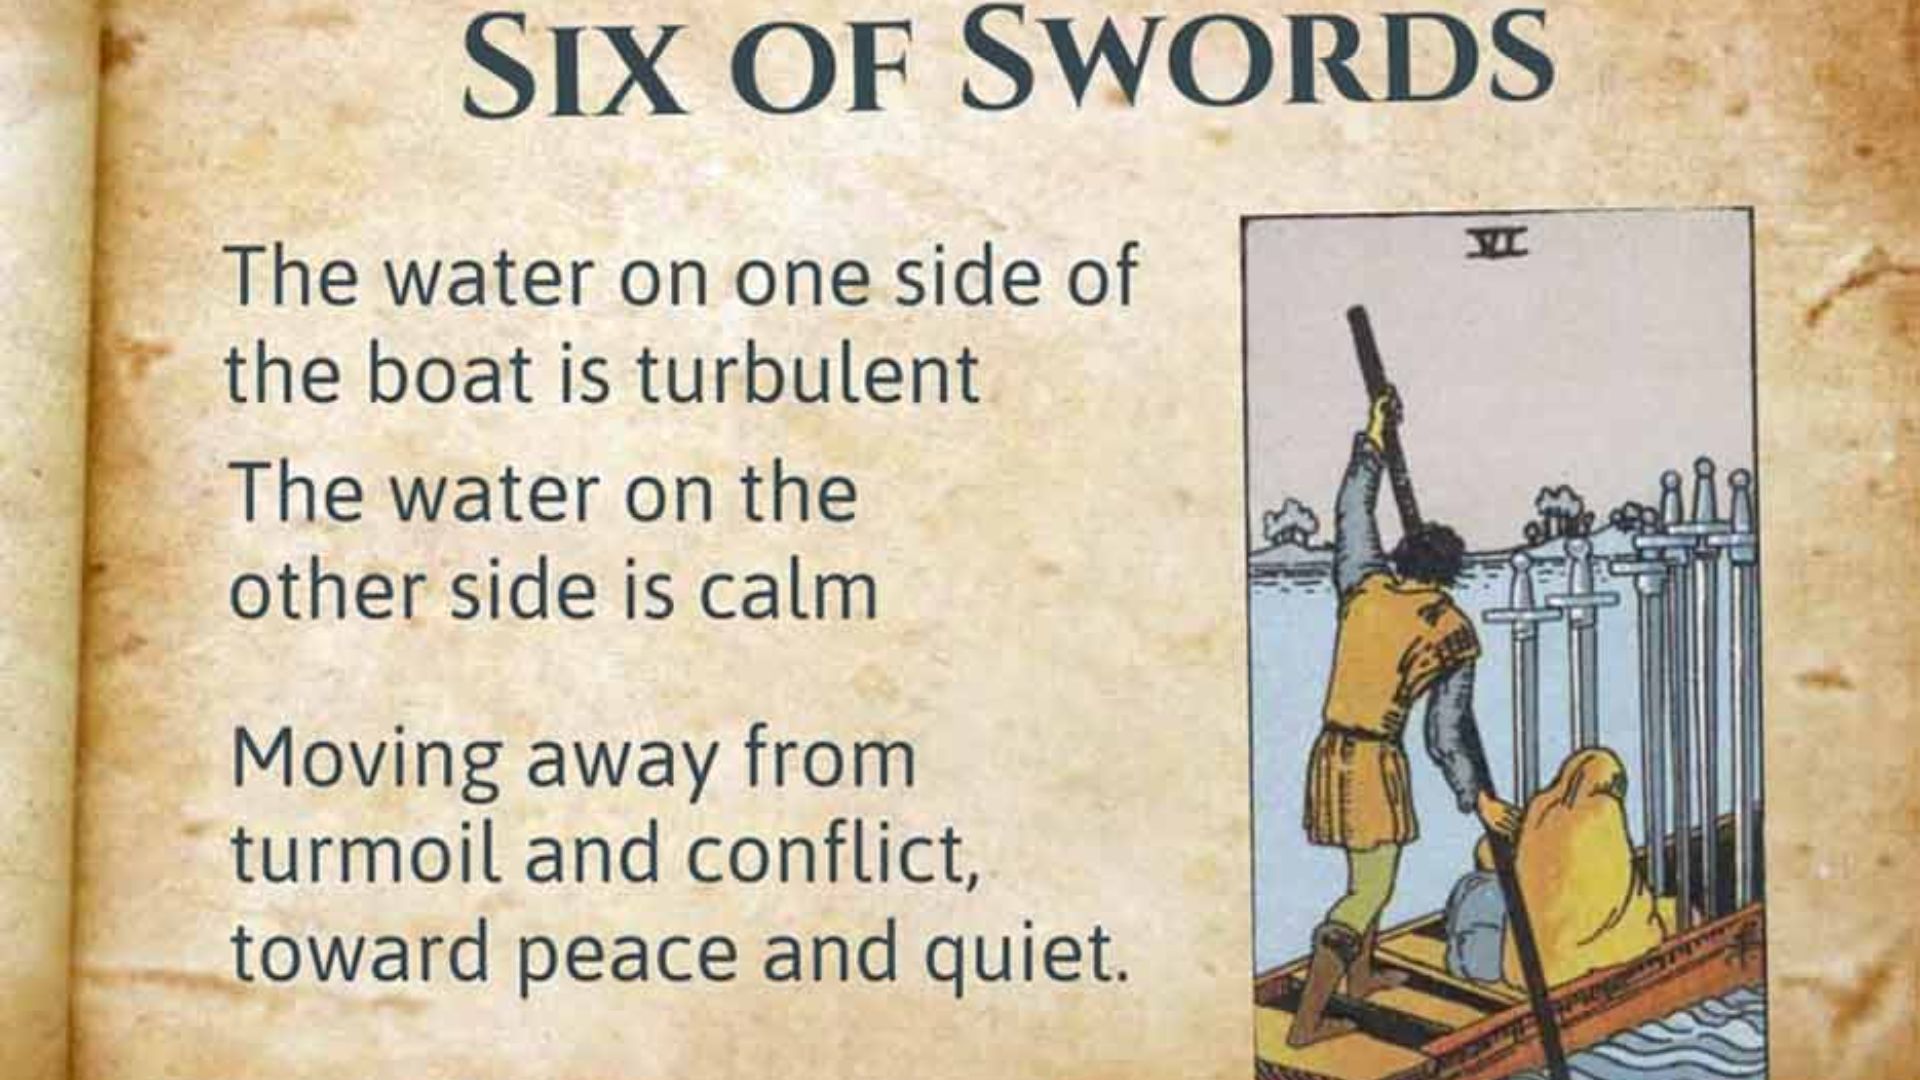 6 of Swords Card With Description